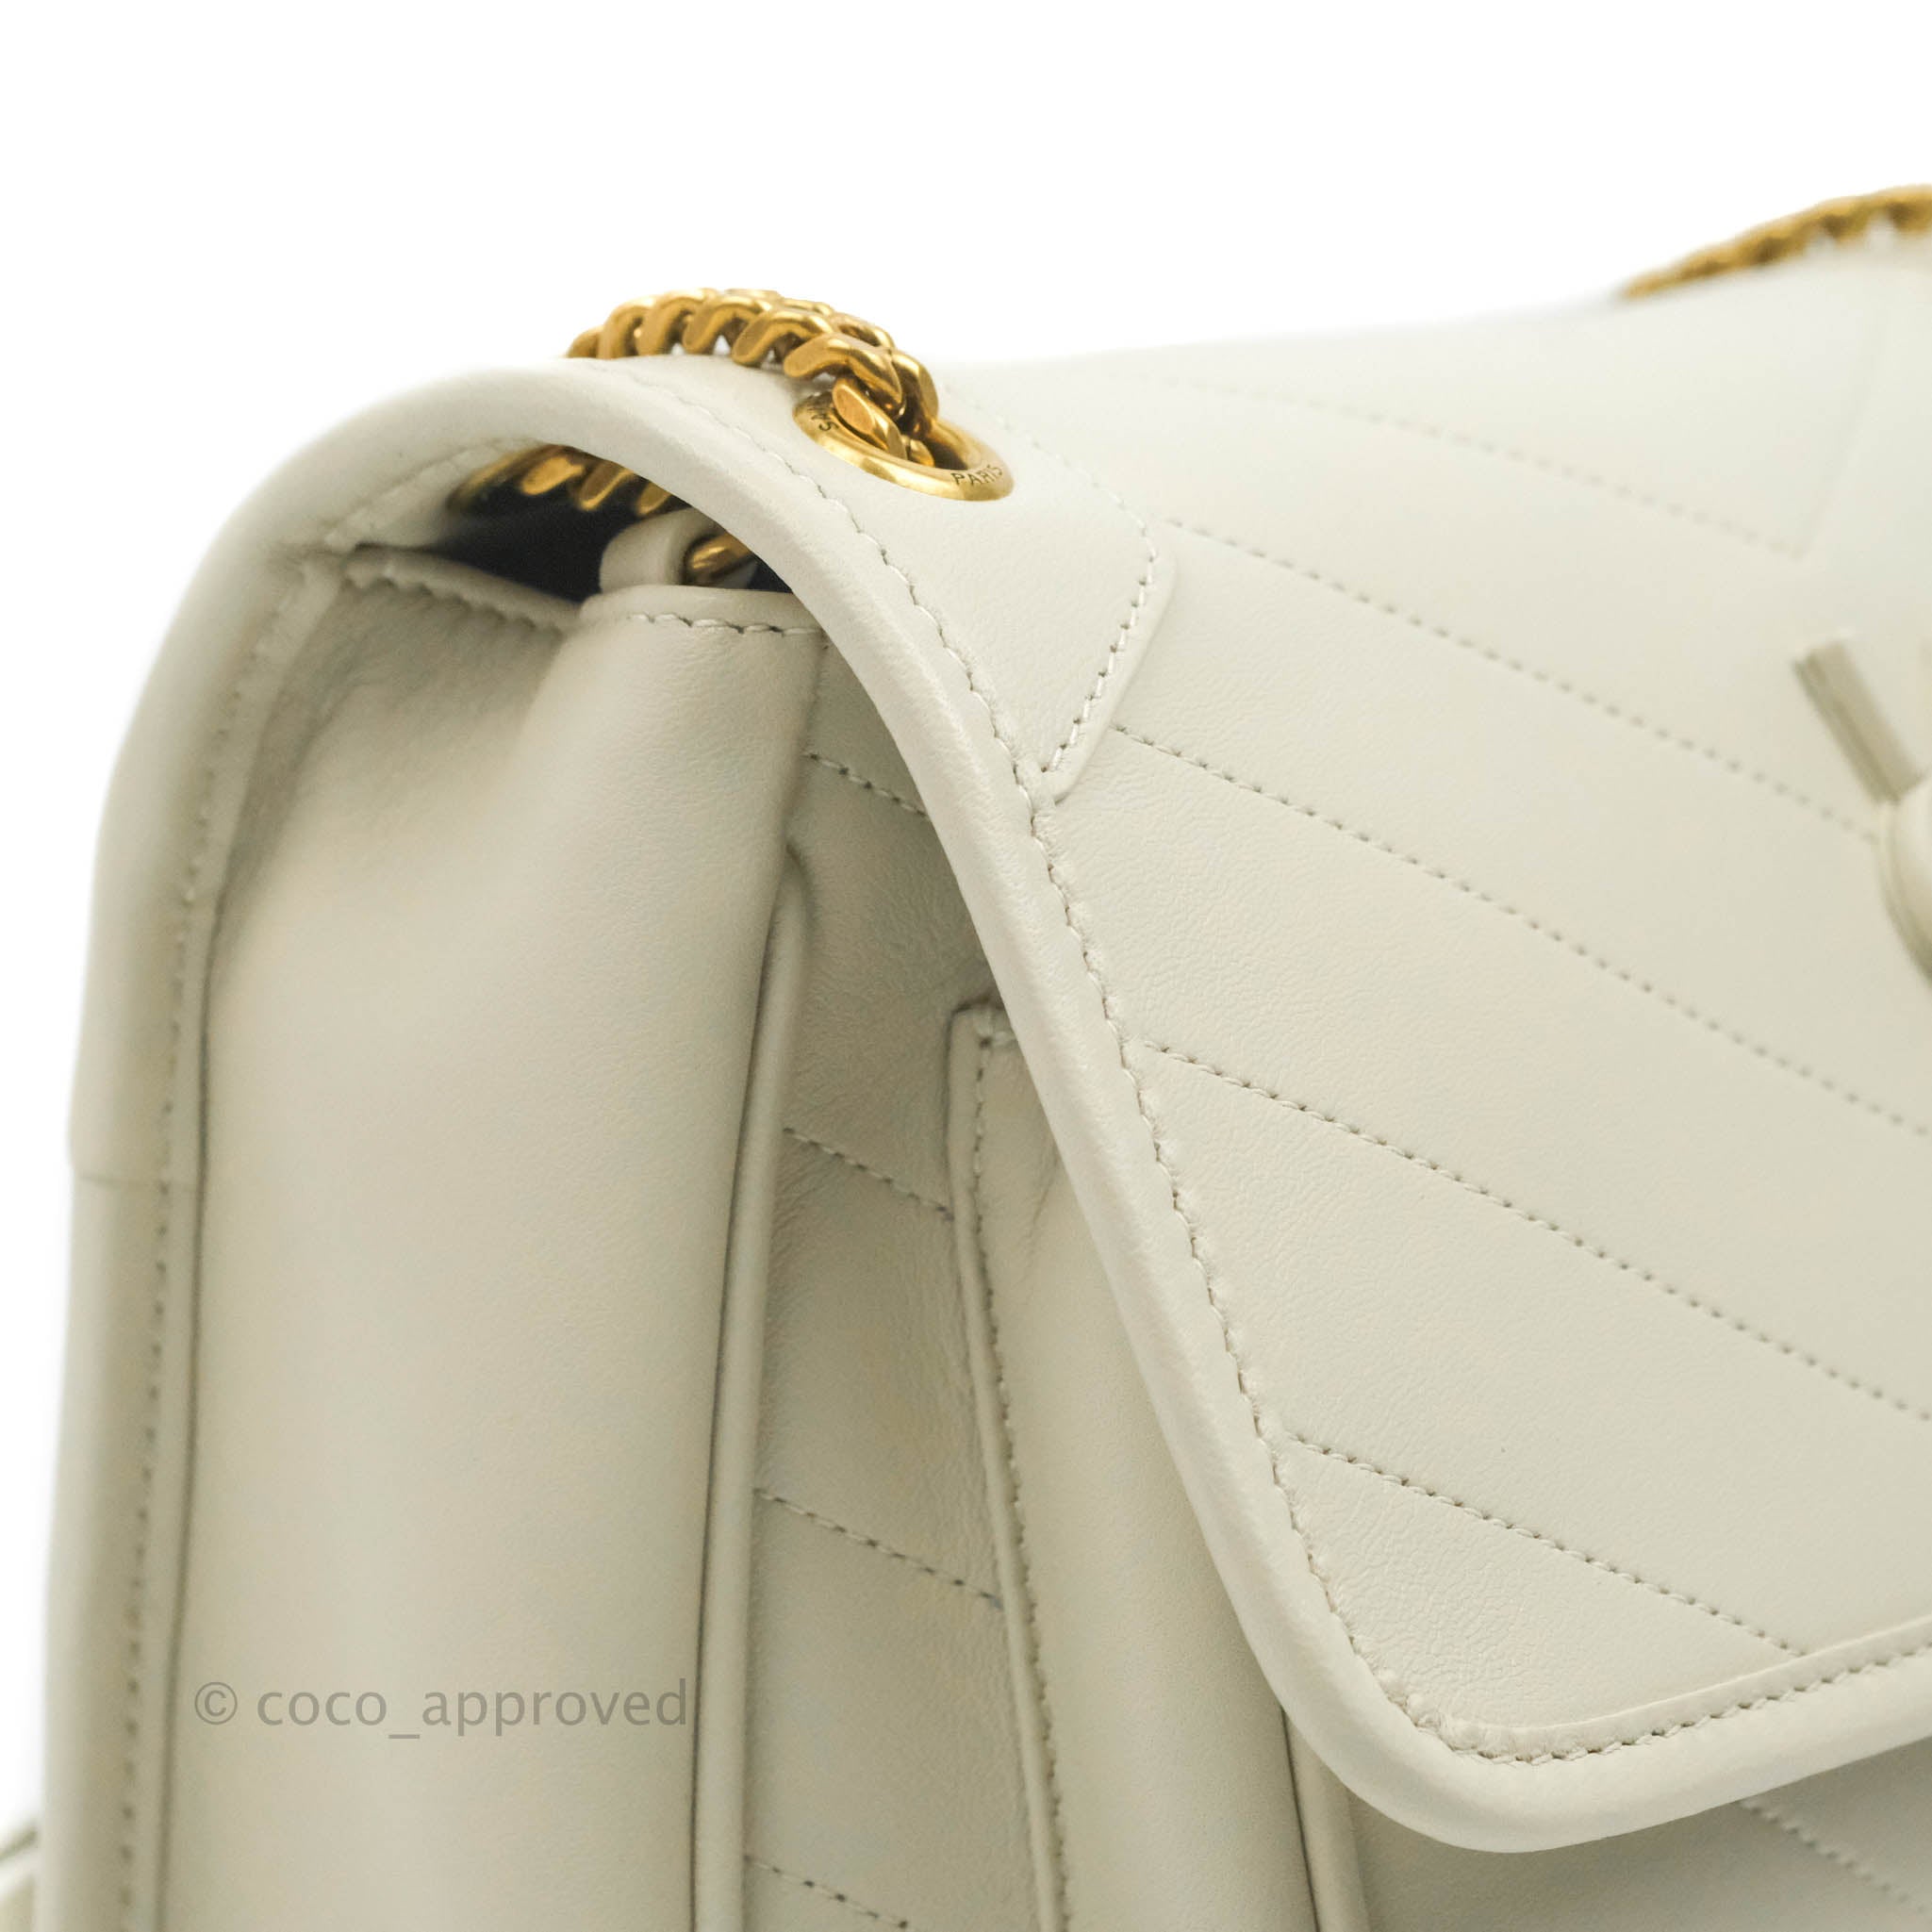 Authentic Saint Laurent Double Flap Bag With Gold Chain I Blanc Vintage  Leather